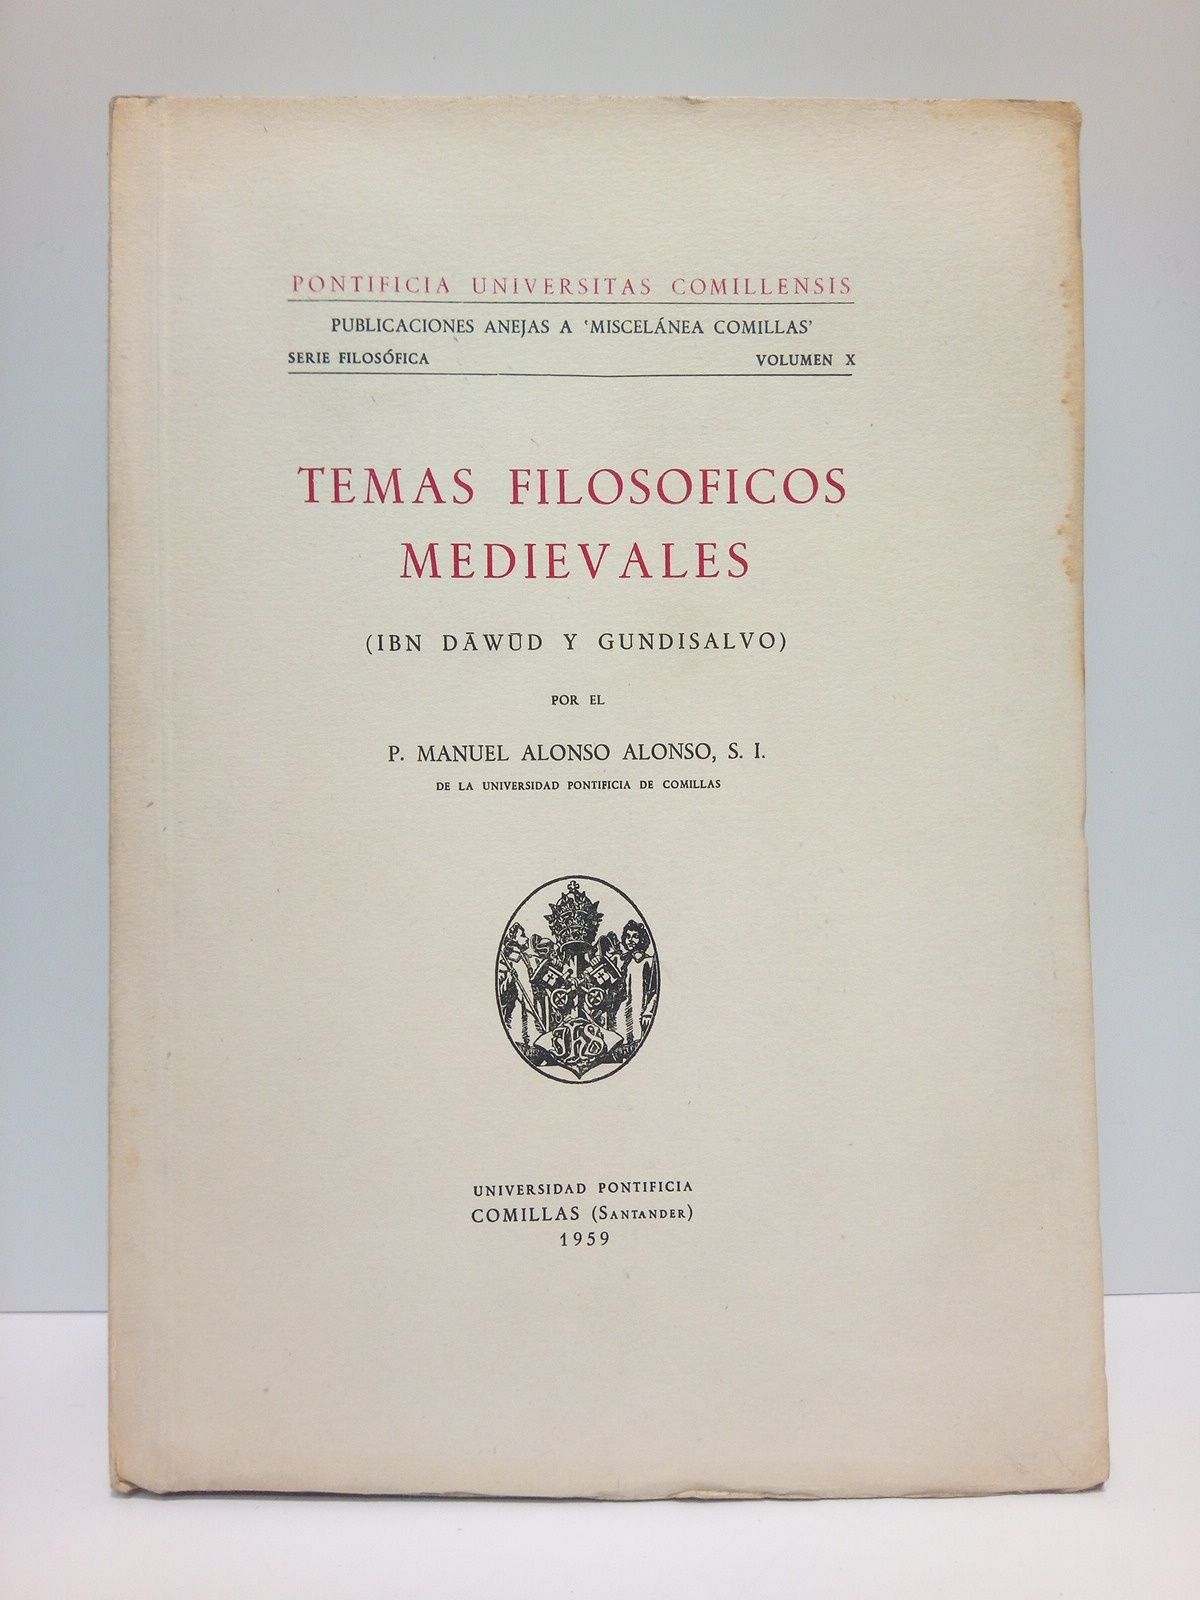 ALONSO ALONSO, P. Manuel, S.I. - Temas filosficos medievales: Ibn Dawud y Gundisalvo